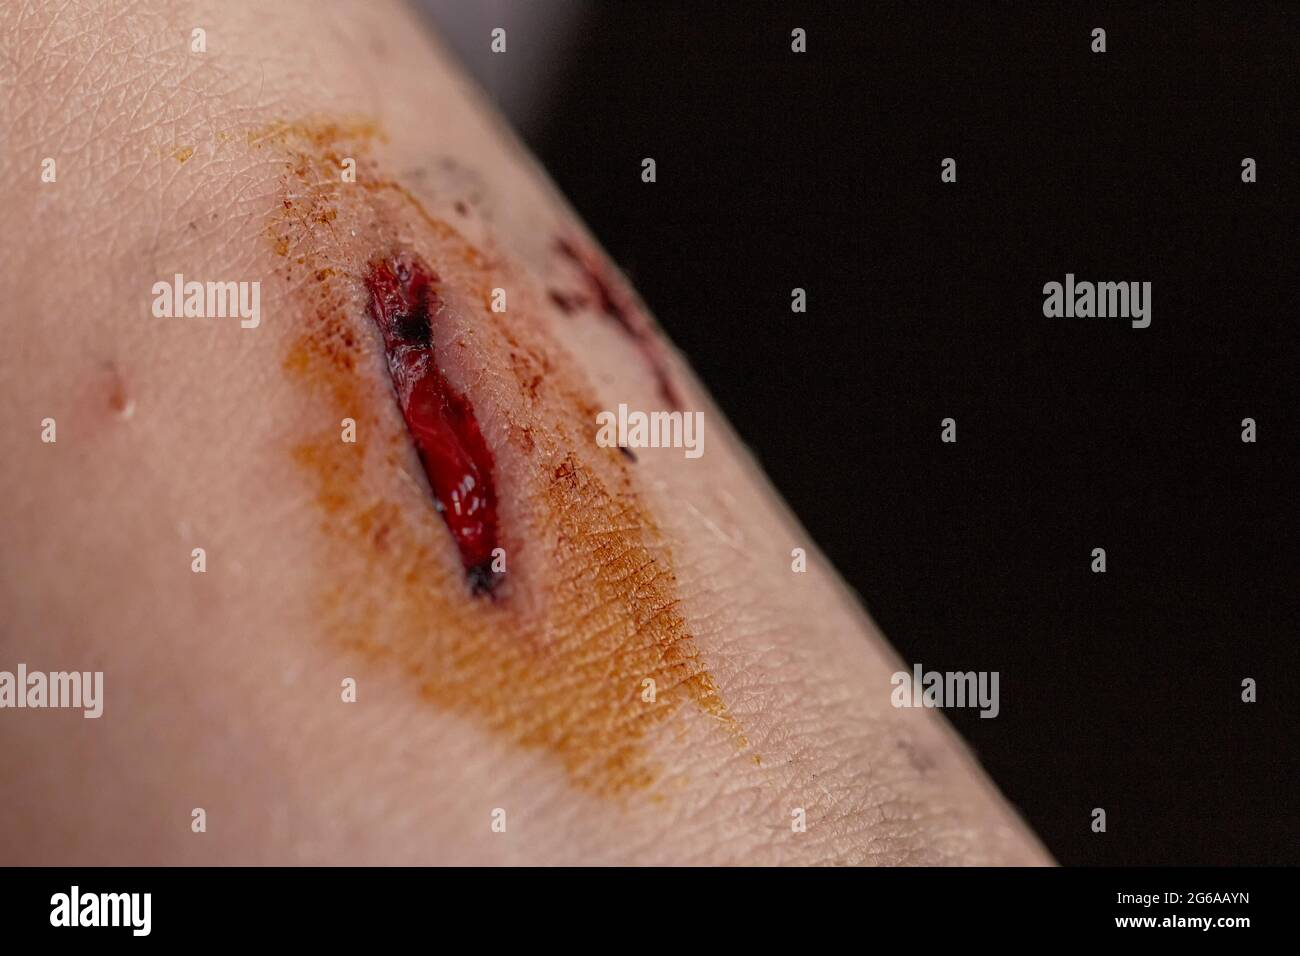 a deep cut on a human body part Stock Photo